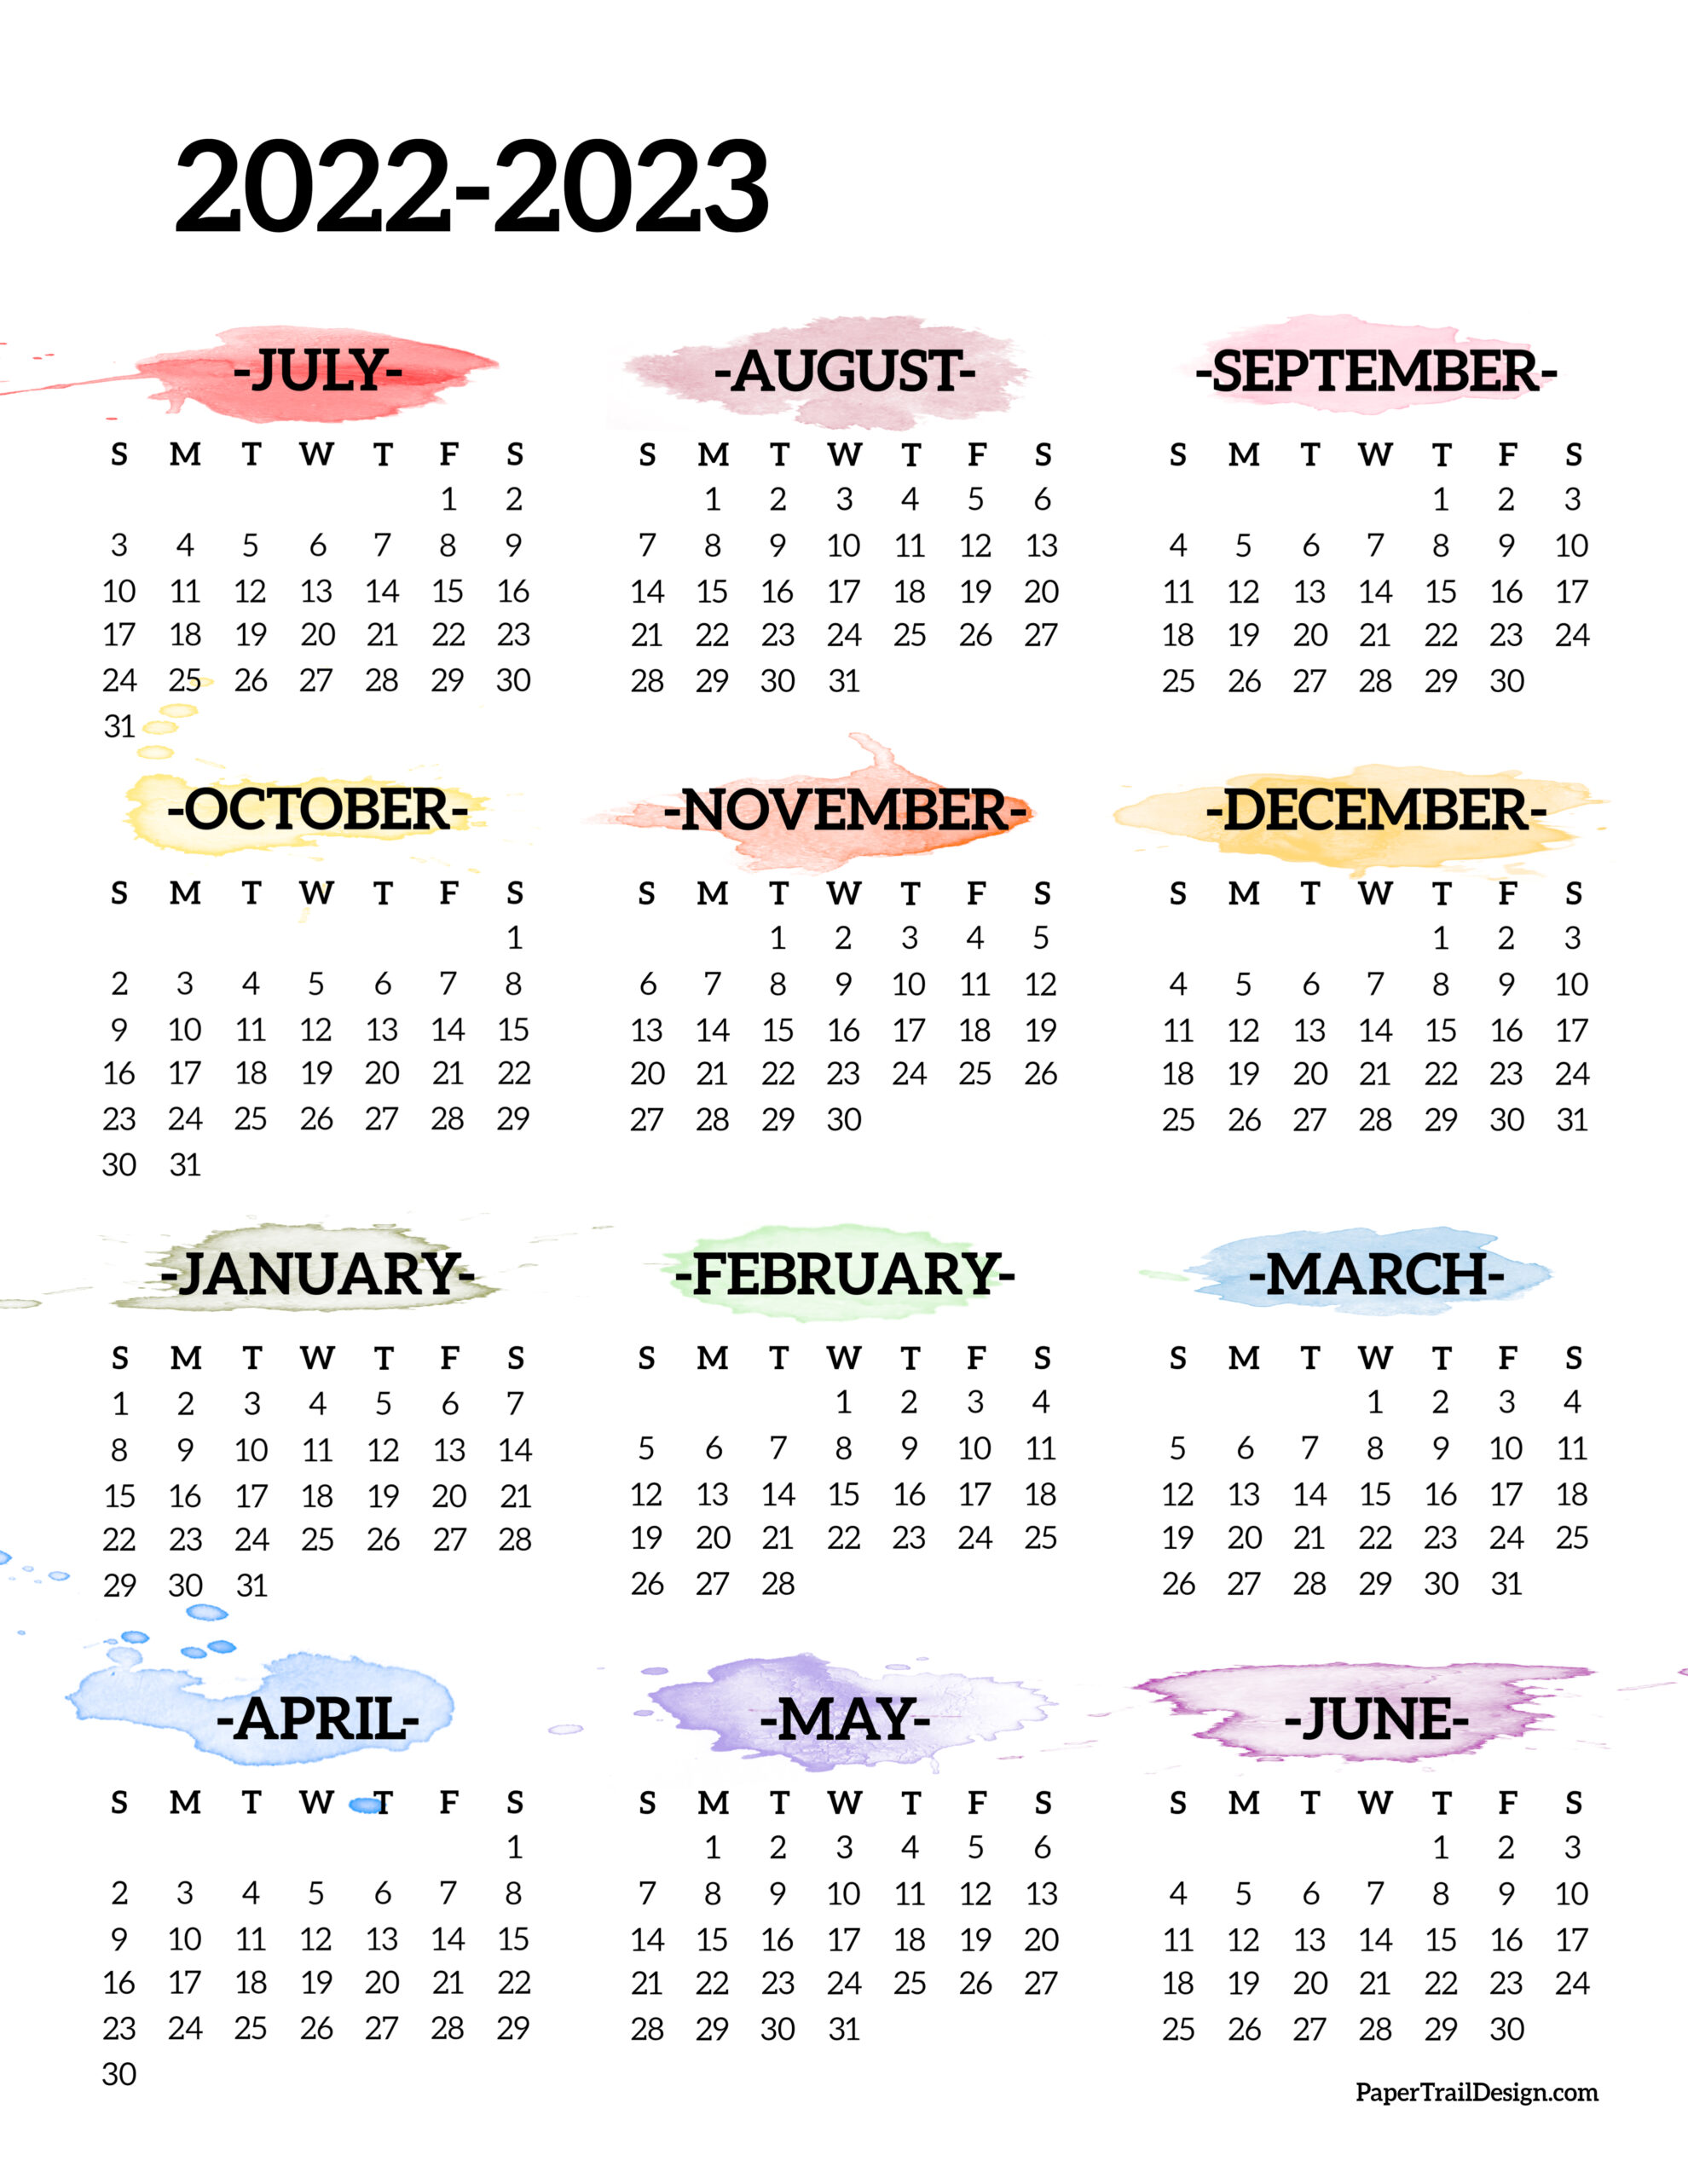 basis-shavano-calendar-2022-2023-2023-calendar